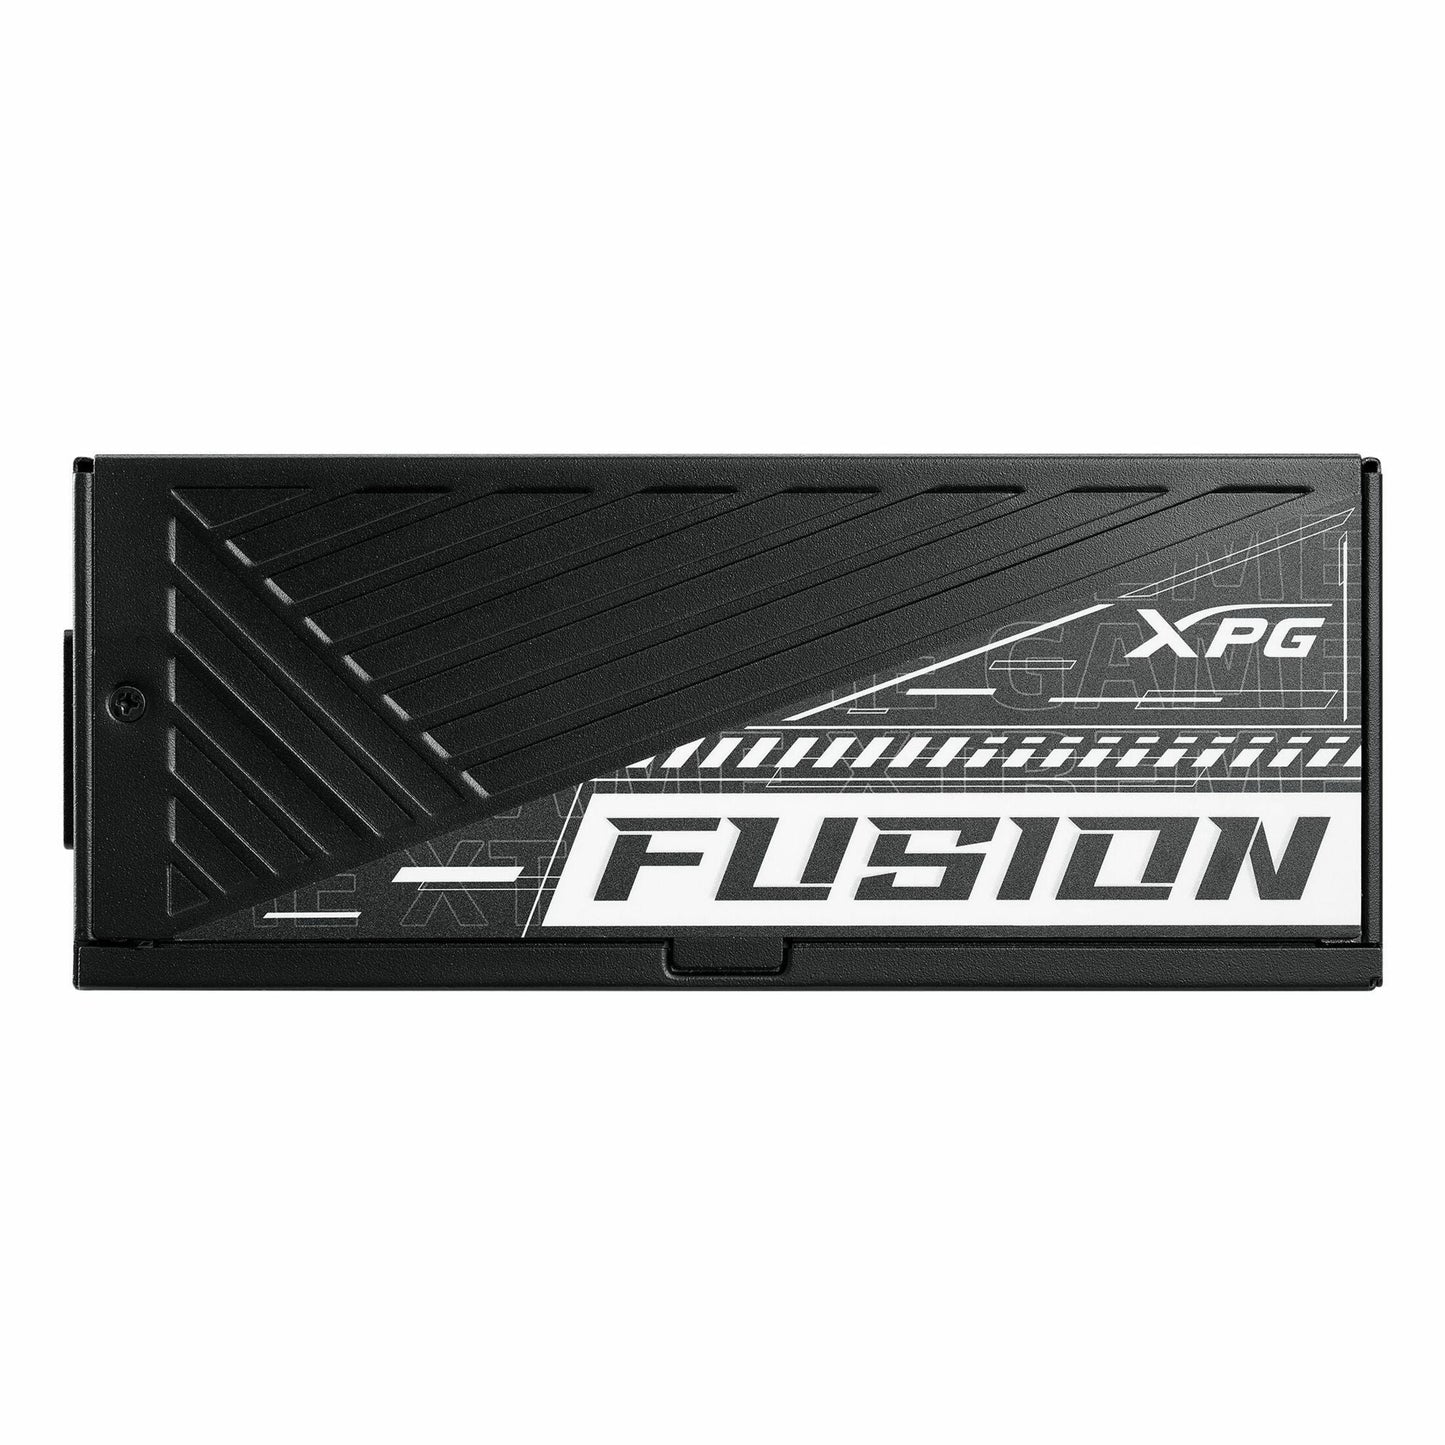 XPG Fusion 1600 Titanium Power Supply